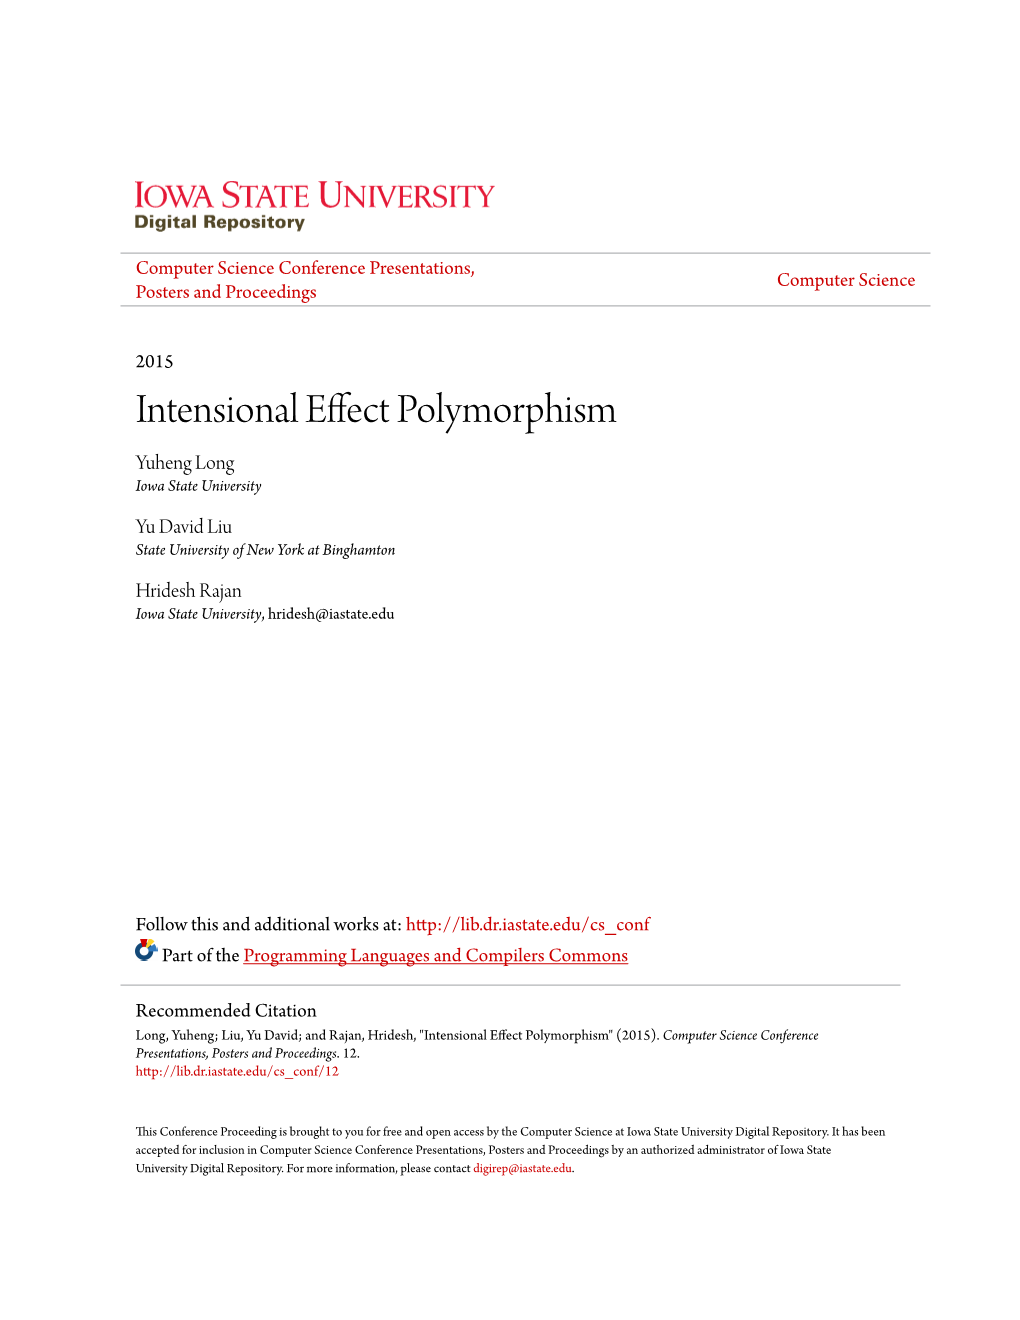 Intensional Effect Polymorphism Yuheng Long Iowa State University